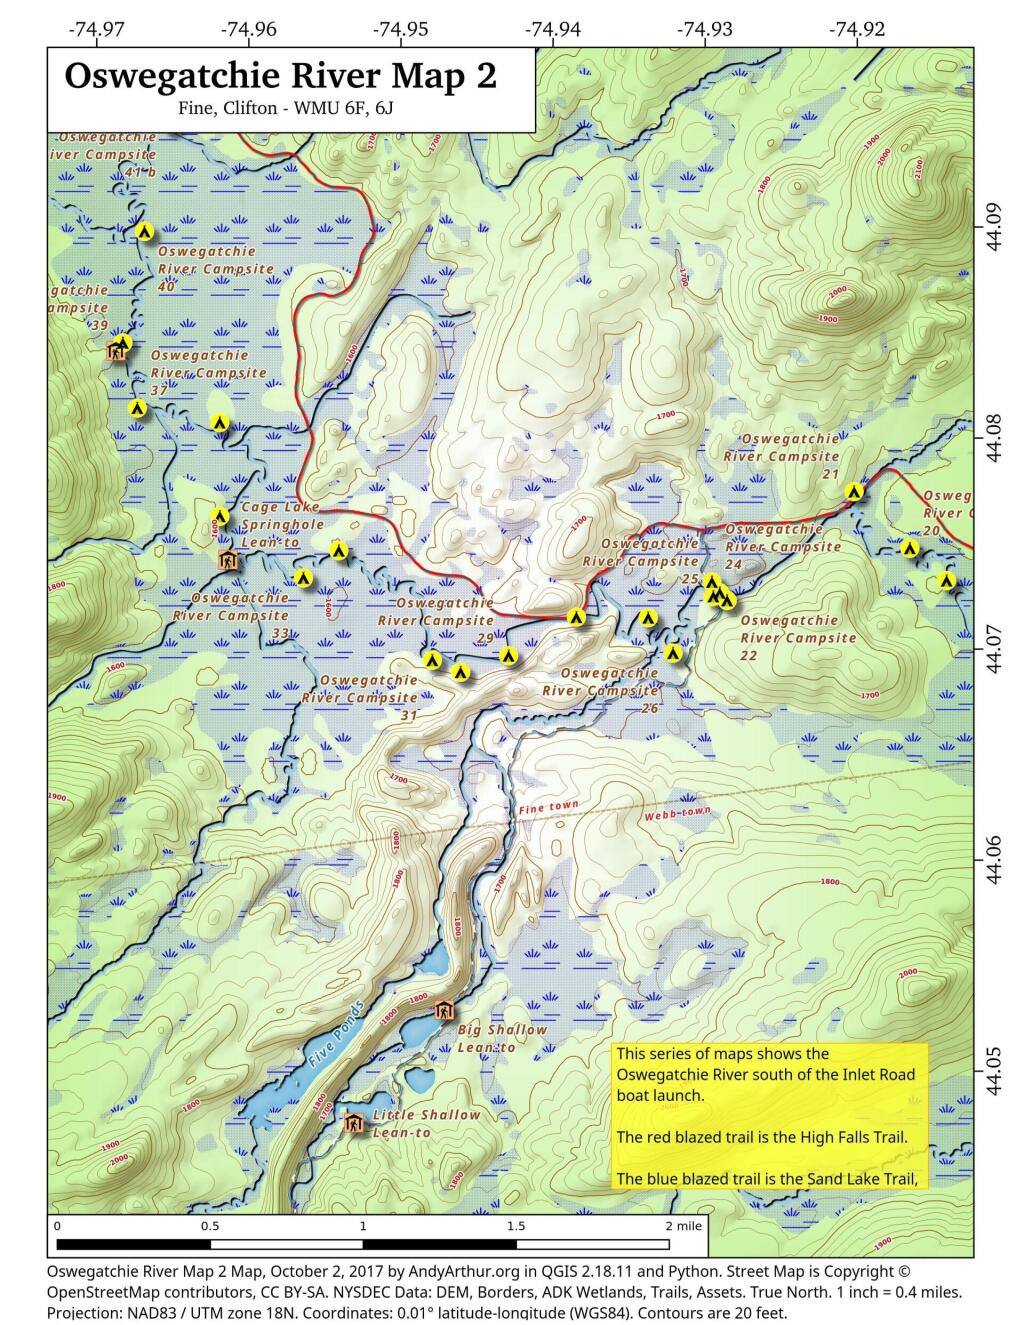  Oswegatchie River Map 2